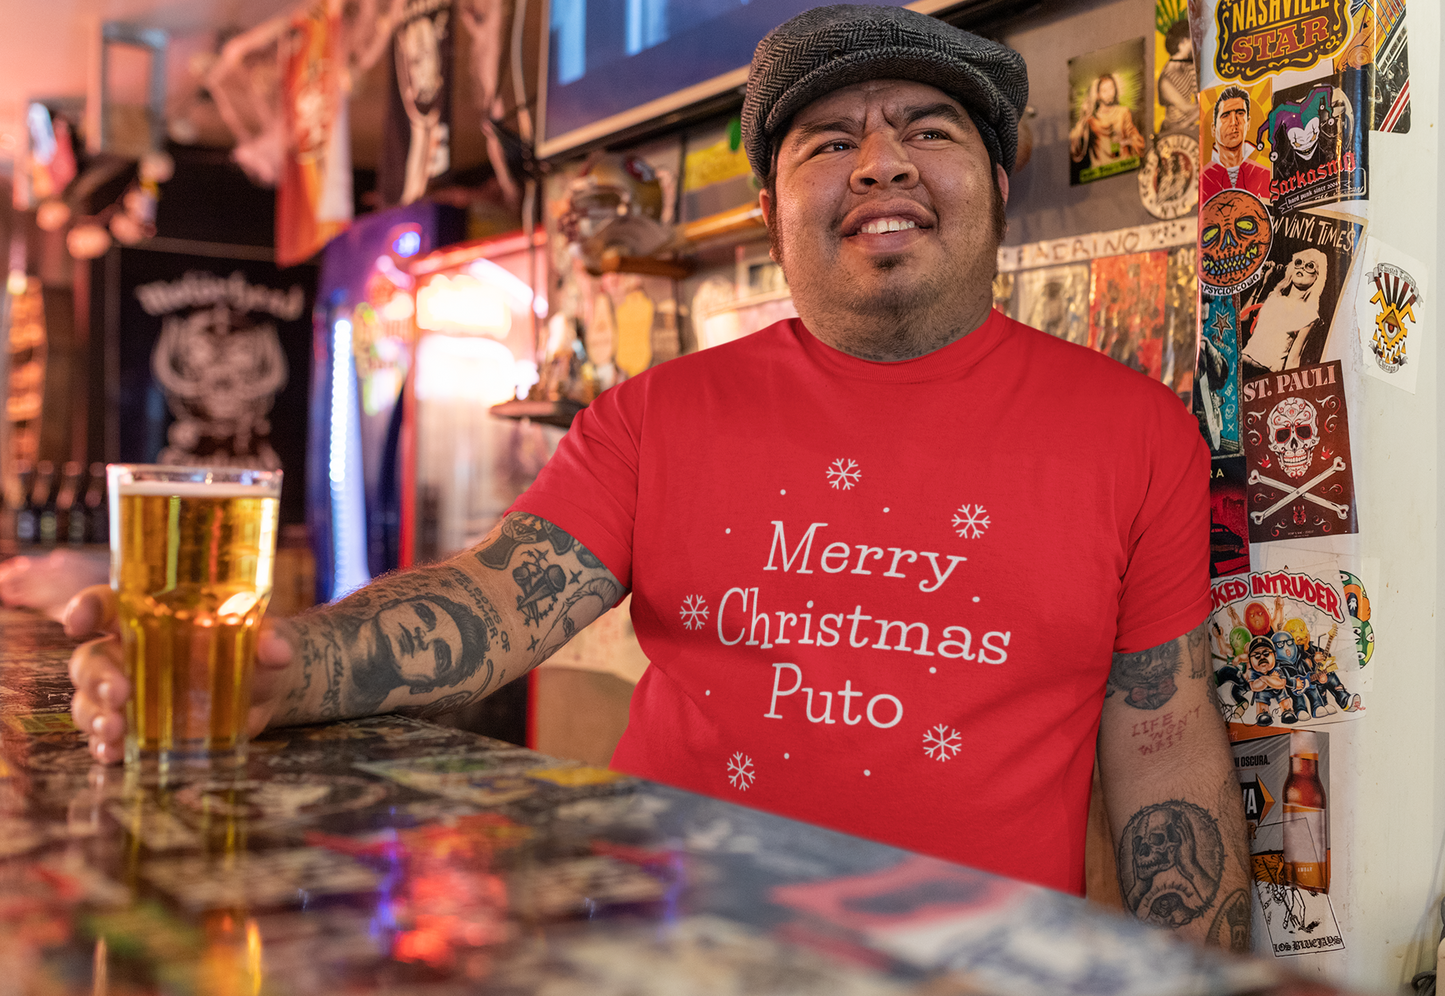 Merry Christmas Puto - Obnoxious Funny Holiday Shirt for Men Husband Dad